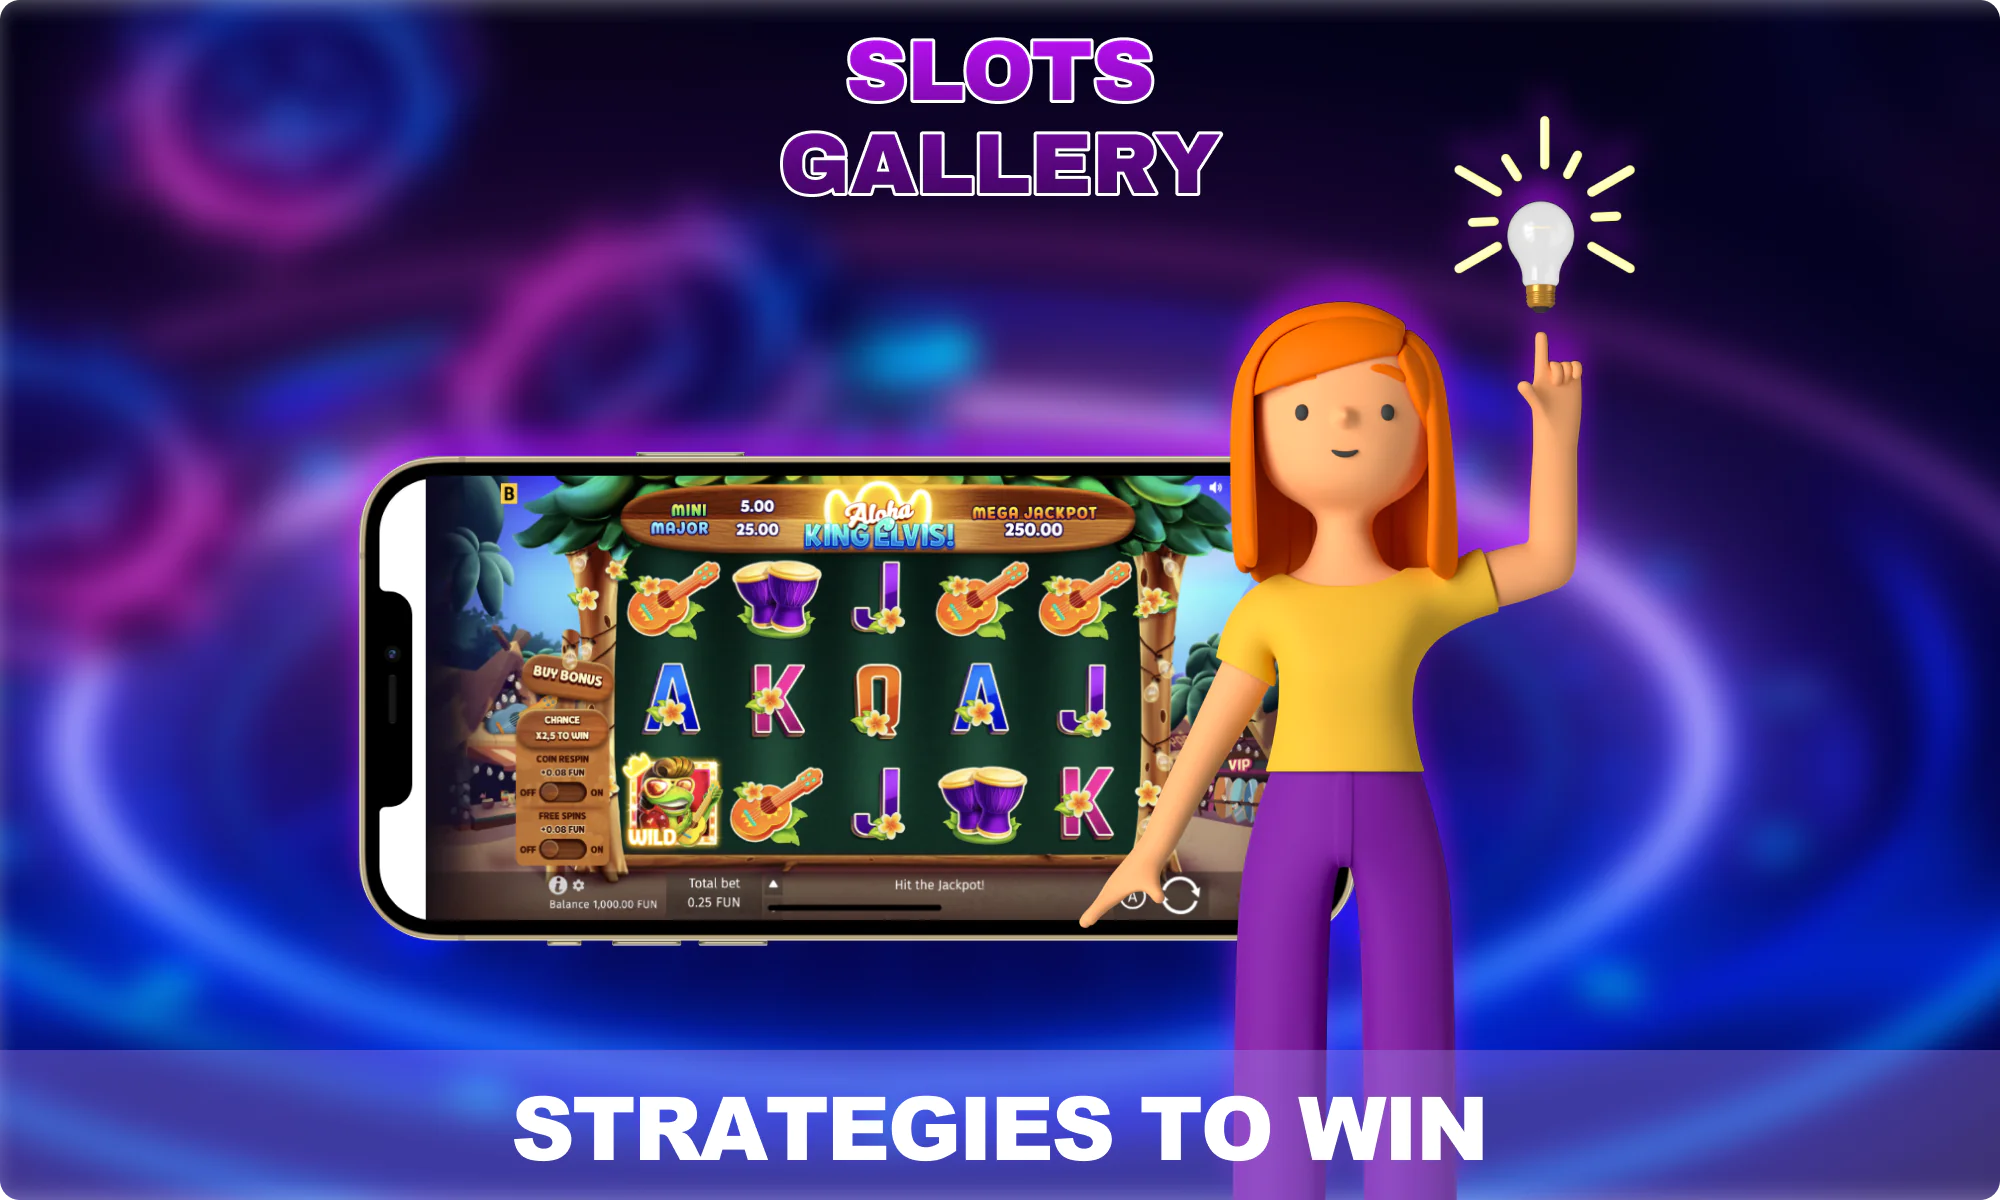 Strategies to win at Slots Gallery Casino